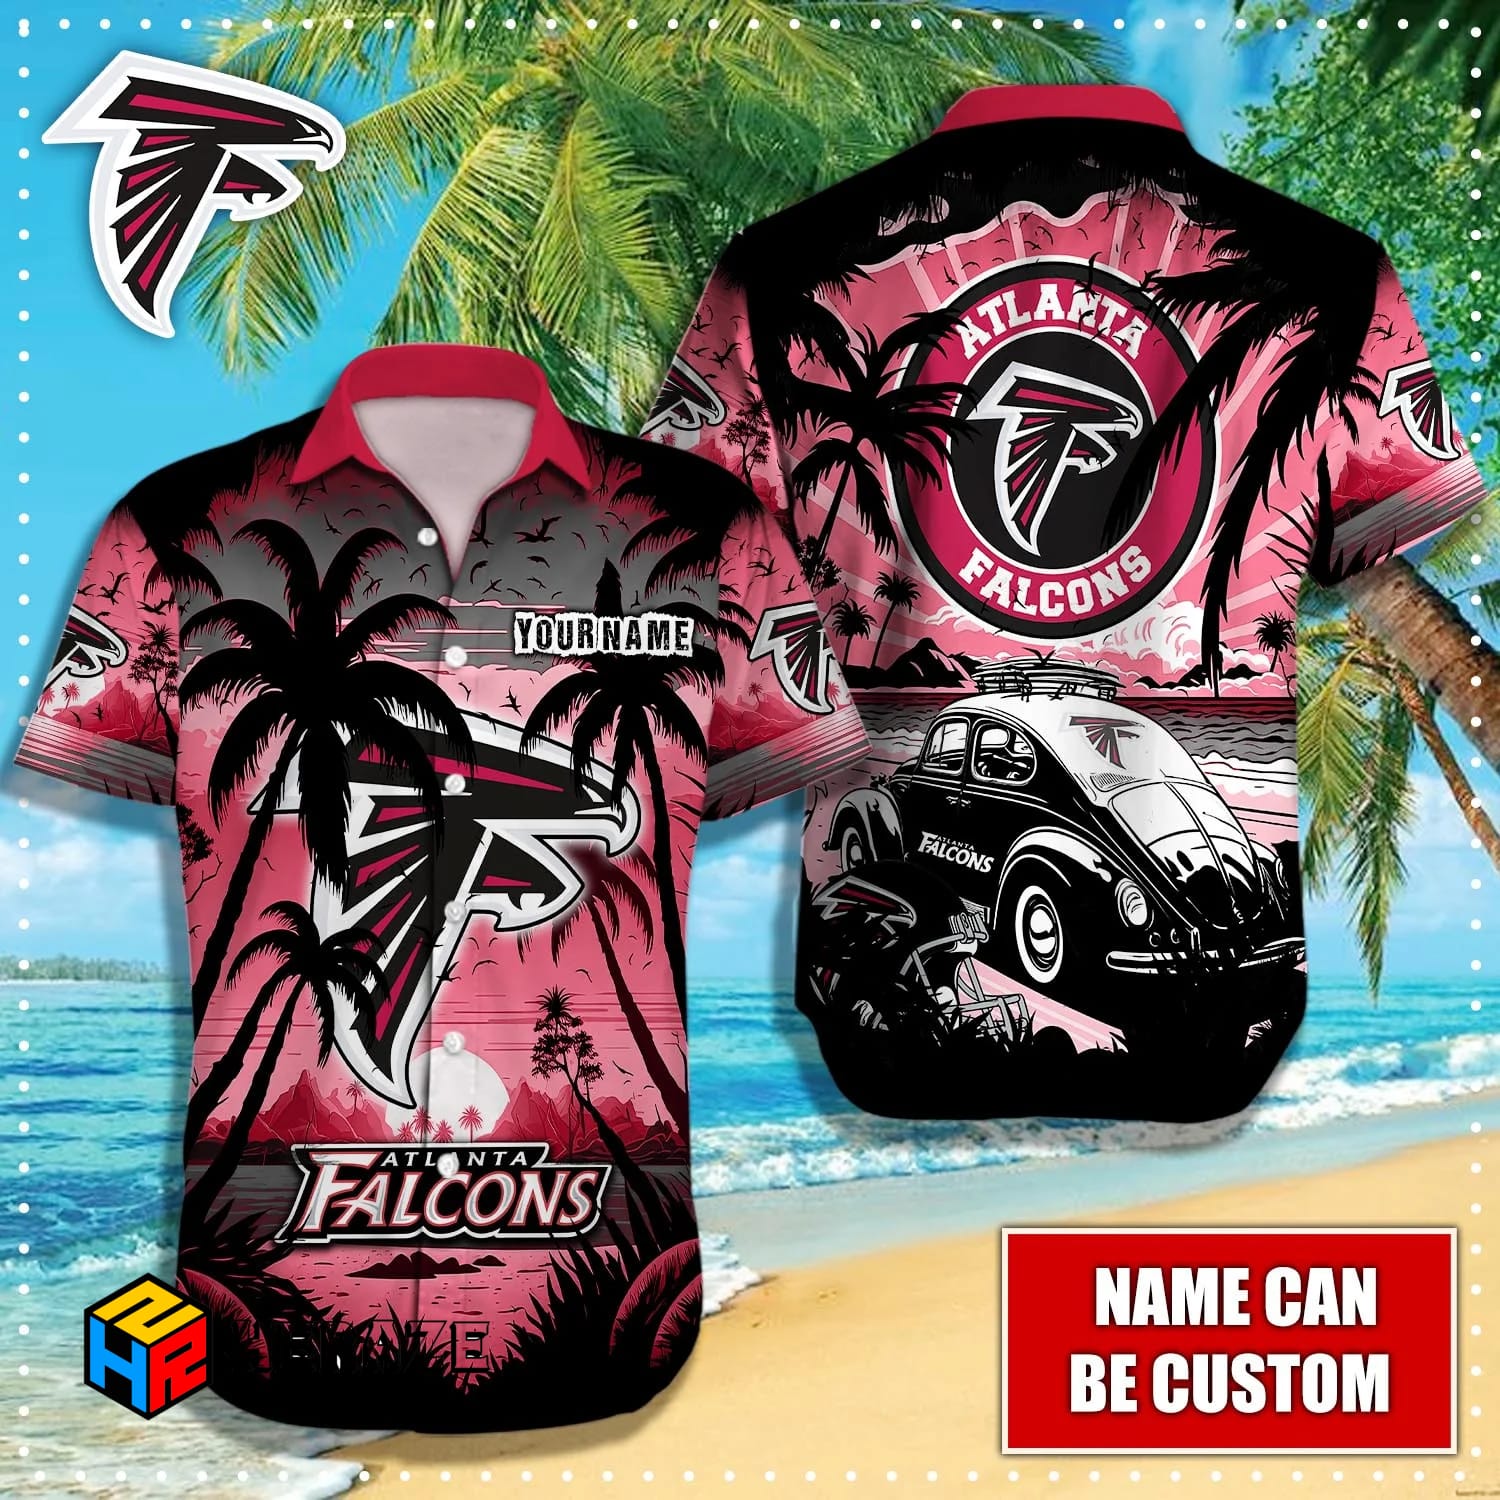 custom falcons jersey